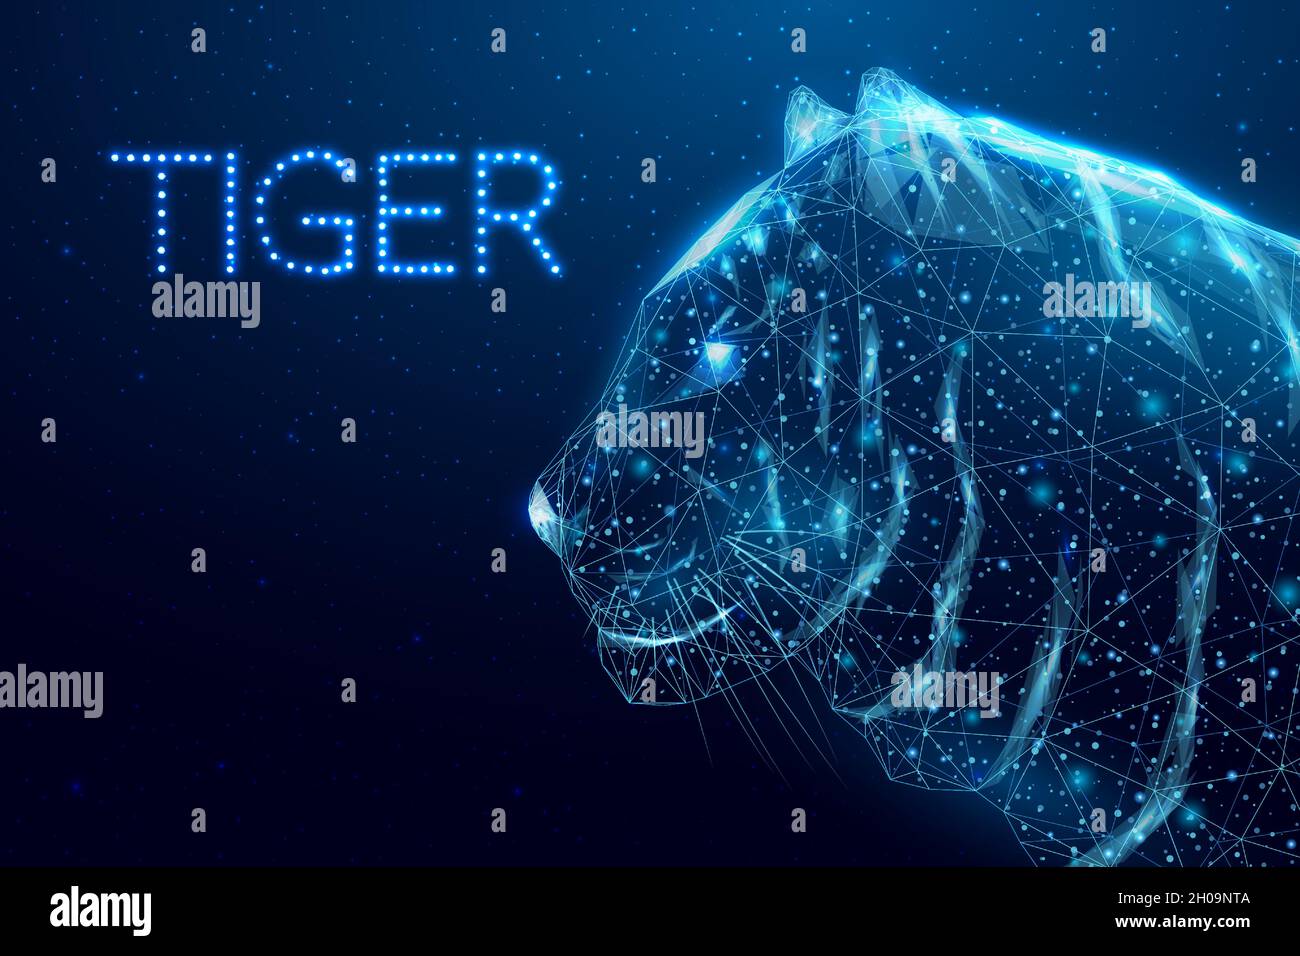 Drahtmodell polygonaler Tiger. Konzept mit leuchtendem Low-Poly-Head-Tiger. Futuristischer, moderner abstrakter Hintergrund. Vektorgrafik. Stock Vektor